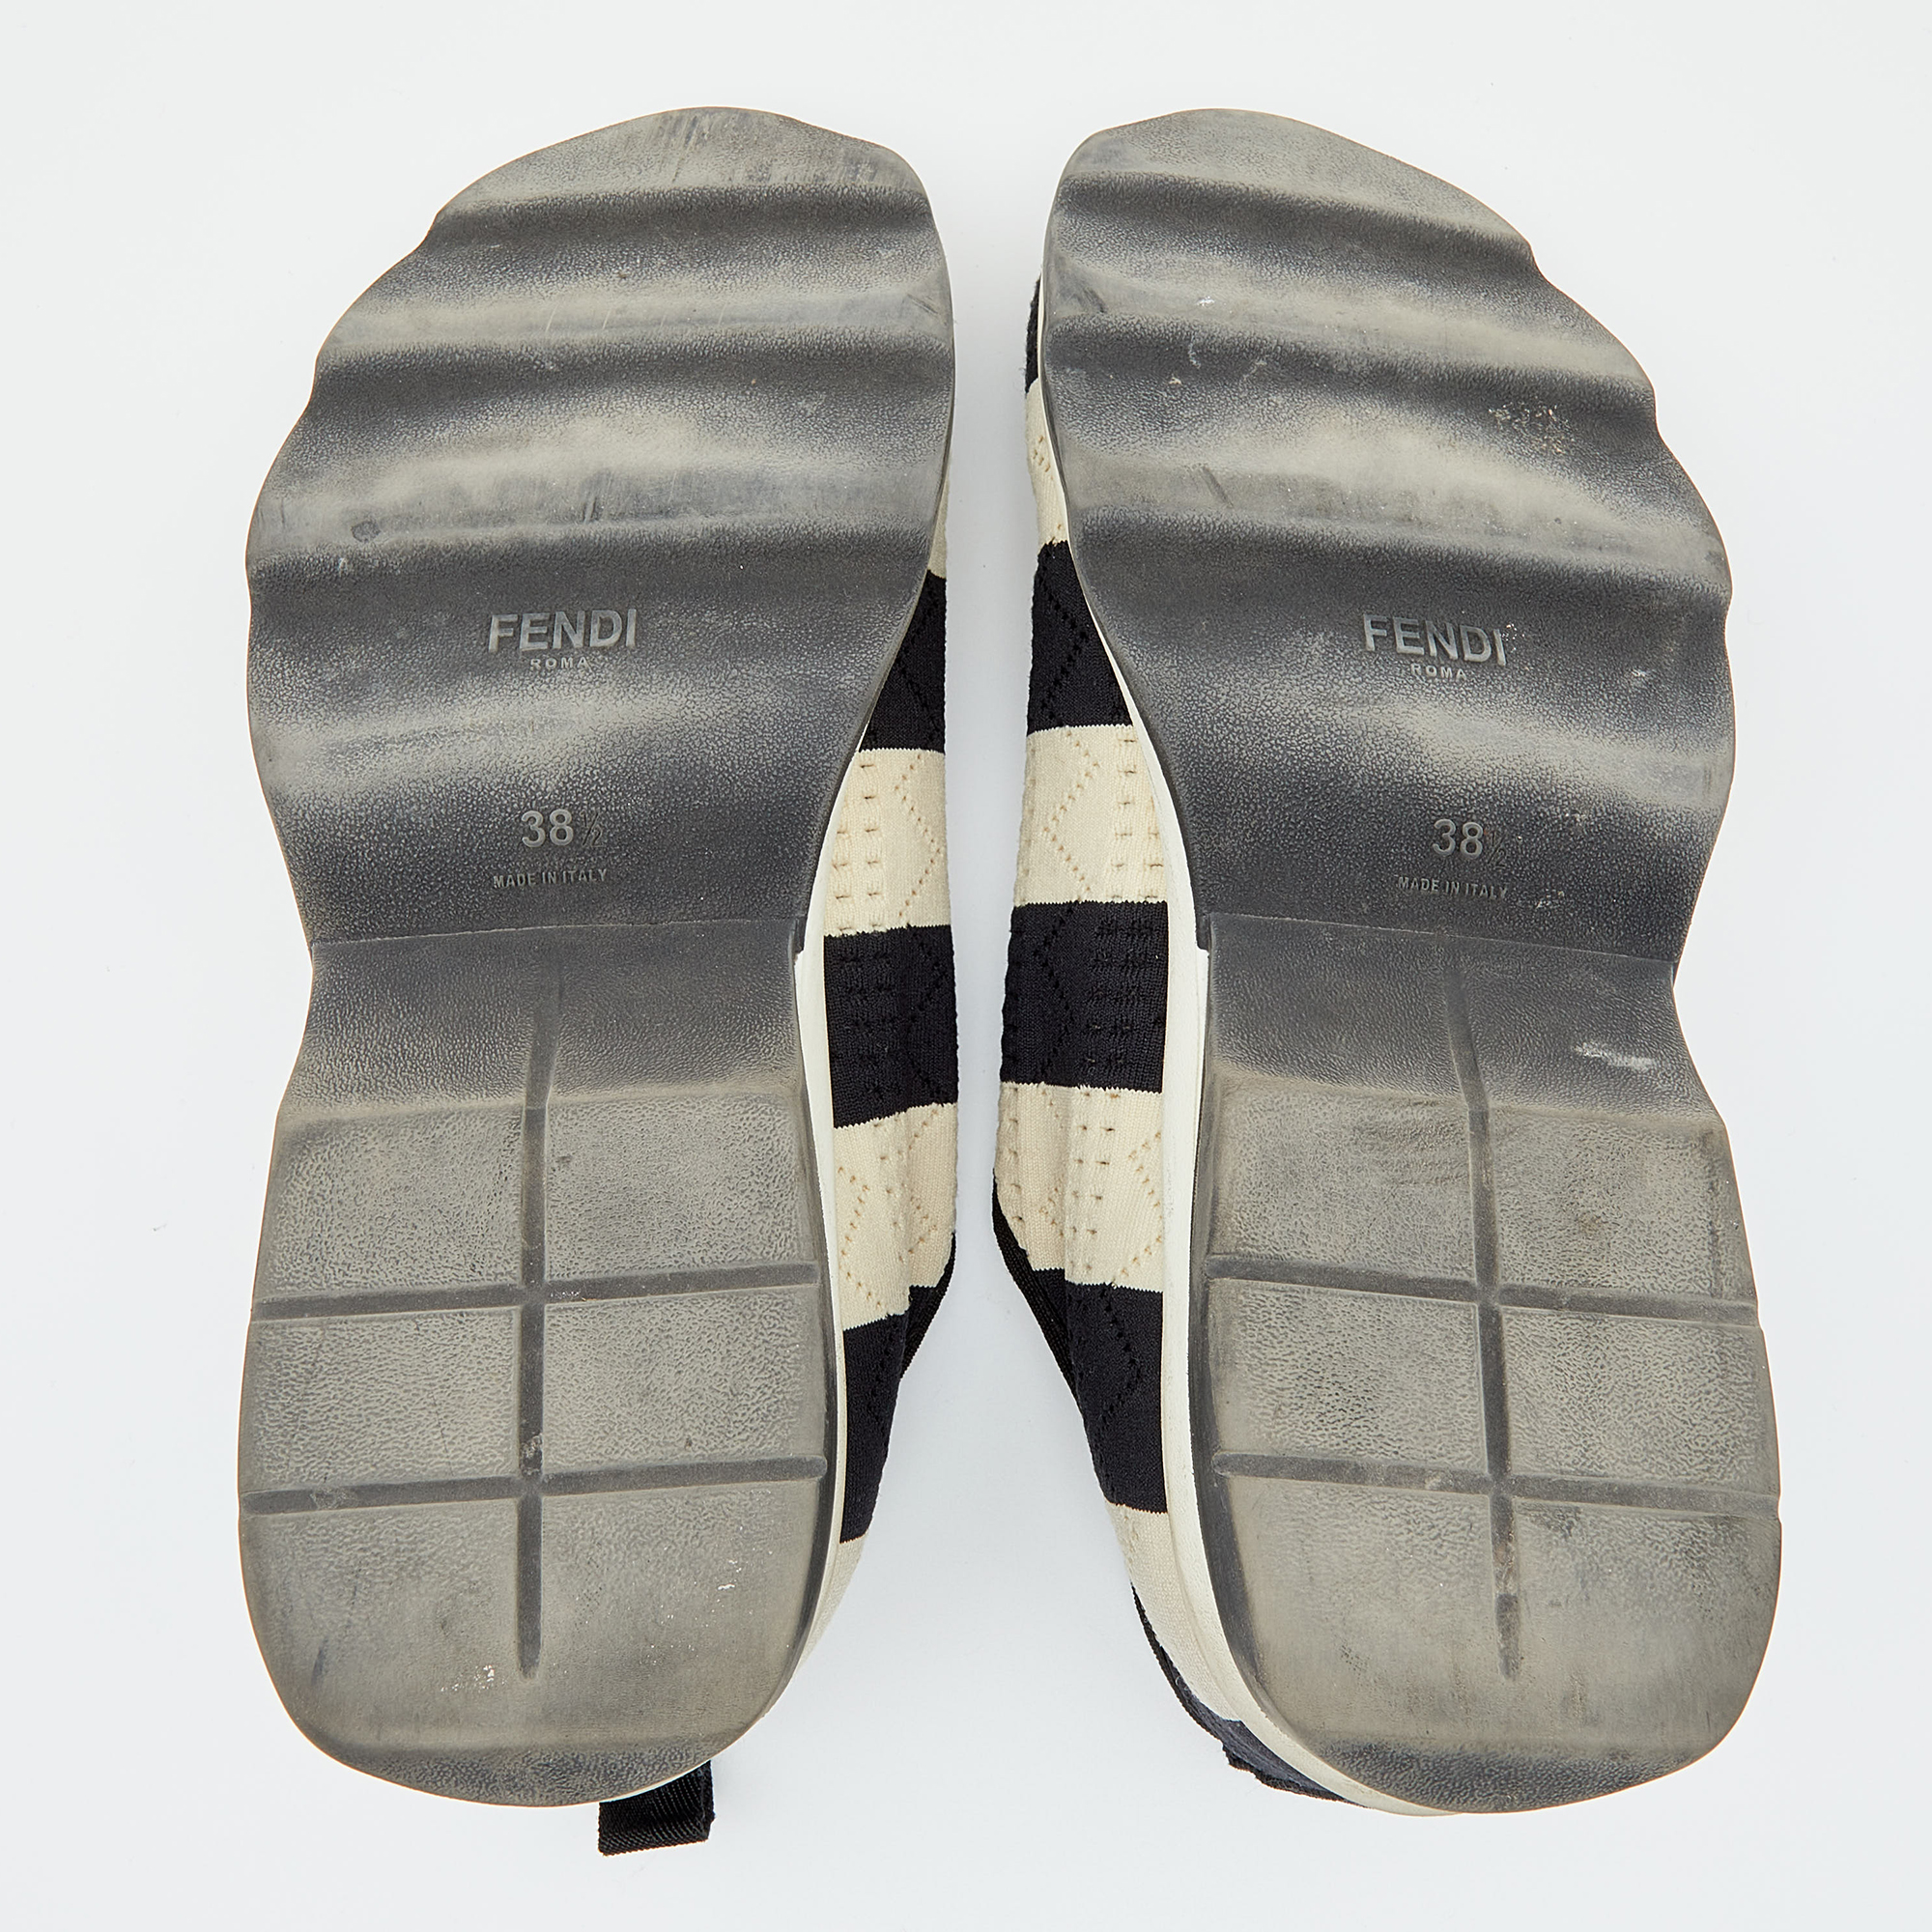 Fendi Black/Off-White Striped Fabric Slip On Sneakers 38.5